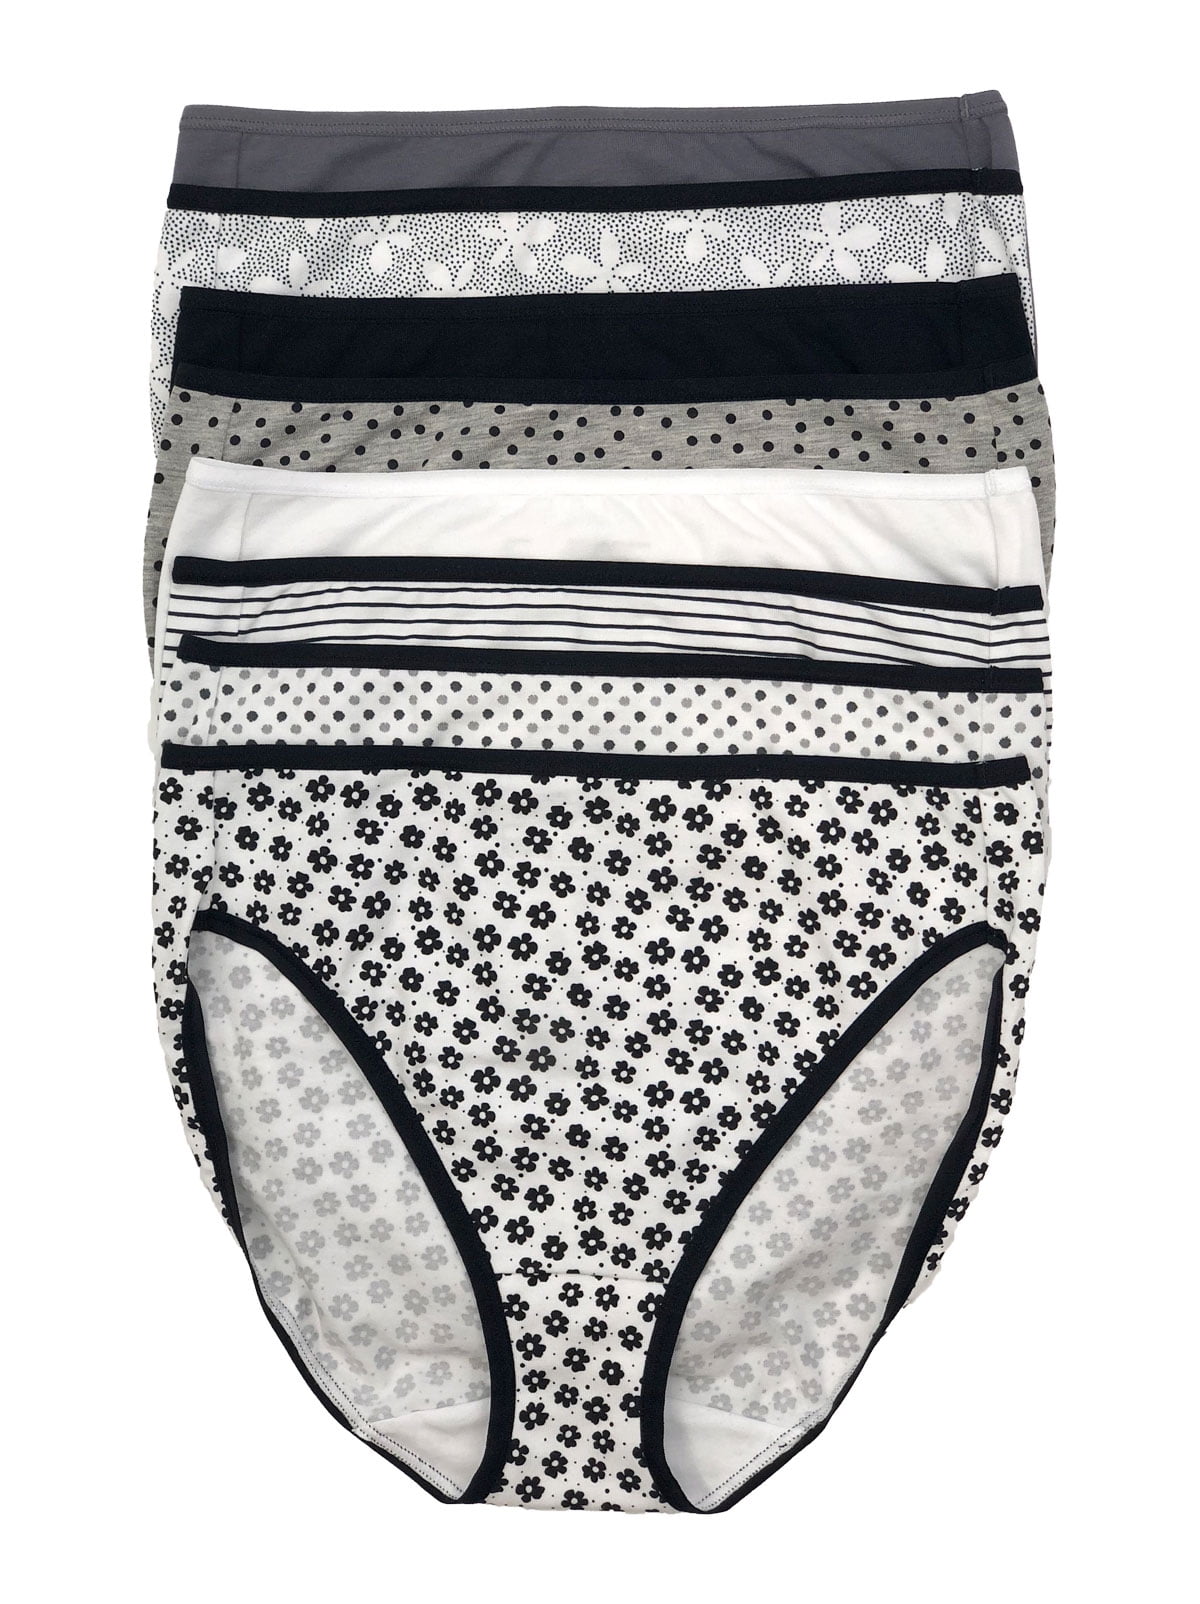 Felina Cotton Modal Hi Cut Panties - Sexy Lingerie Panties for Women -  Underwear for Women 8-Pack (Lavender Fields, Small) 